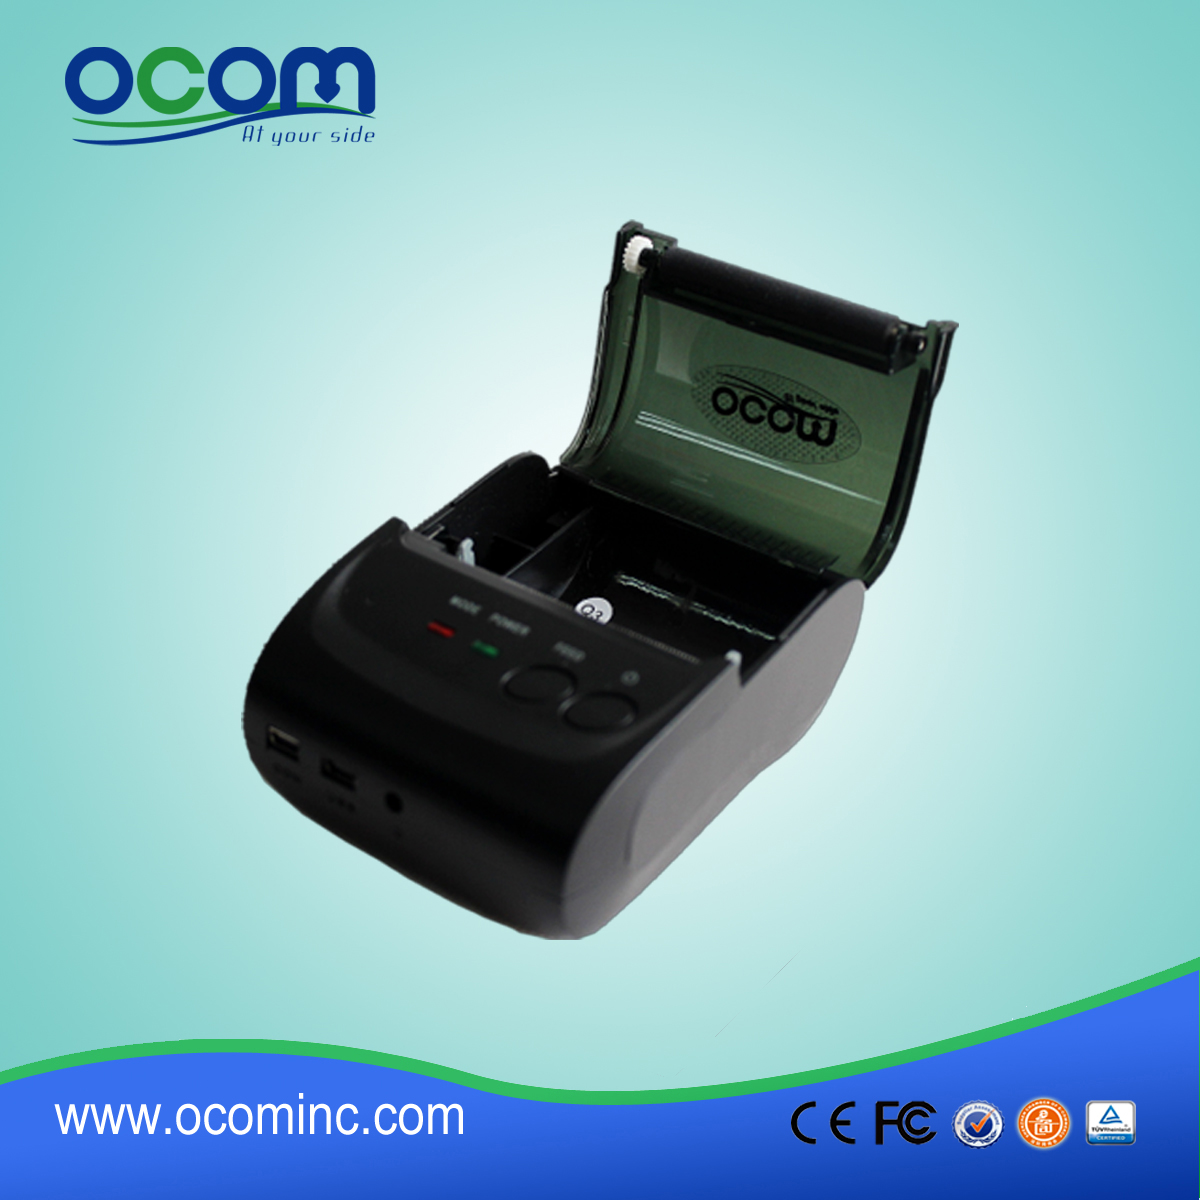 OCPP-M05: 2 "Handheld λειτουργεί με μπαταρία Android Συμβατό Θερμικός Εκτυπωτής Bluetooth